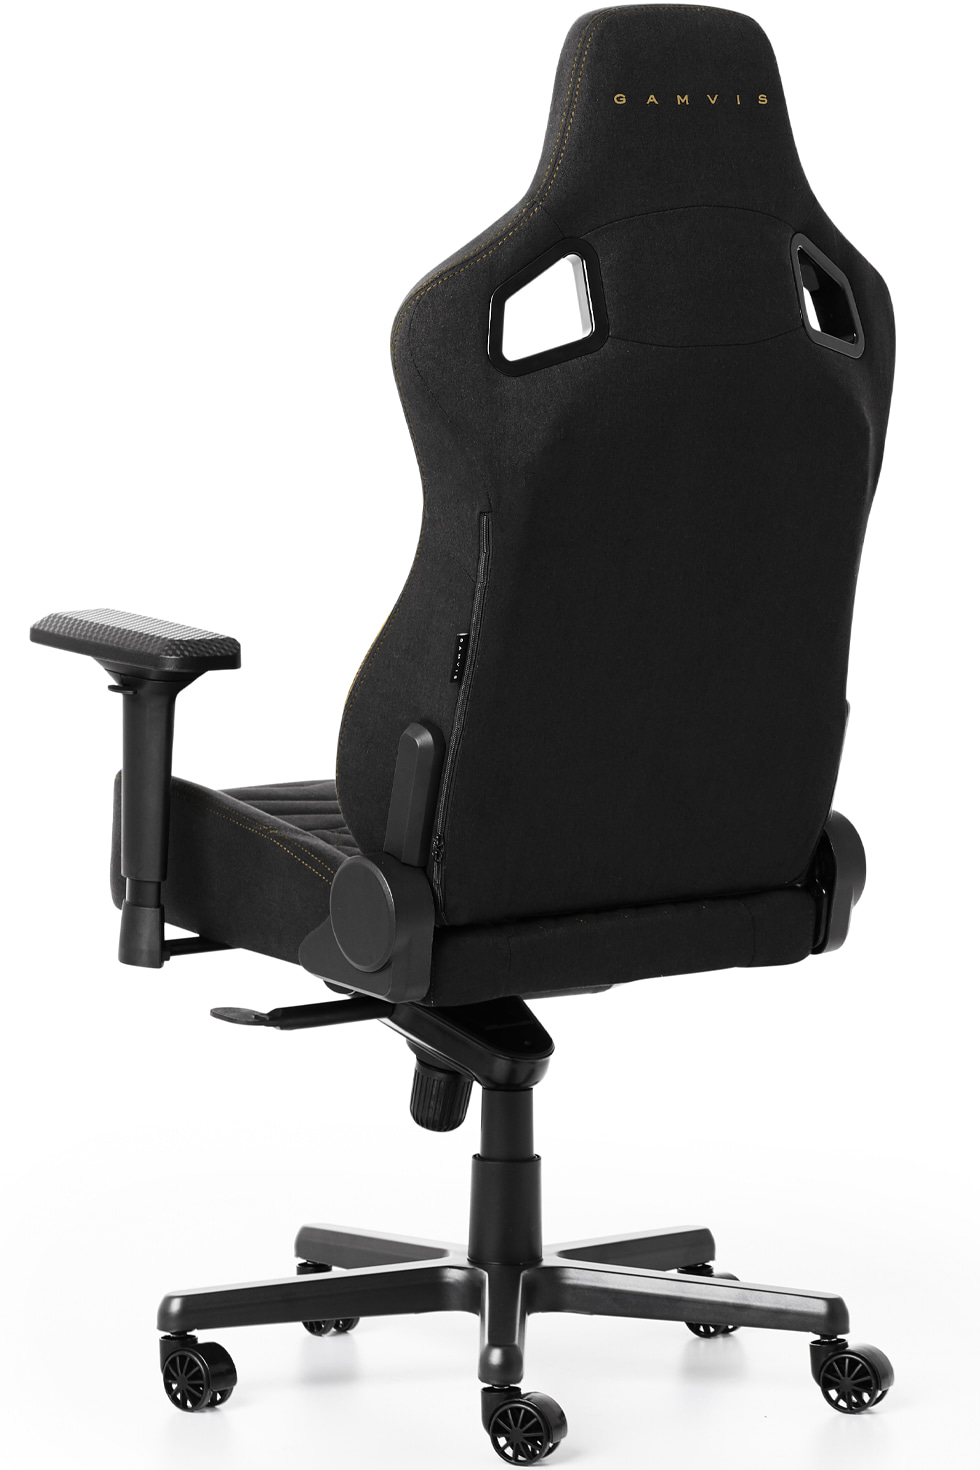 Gamvis ELITE 2.0 XL Fabric Gaming Chair – Black/Royal Gold